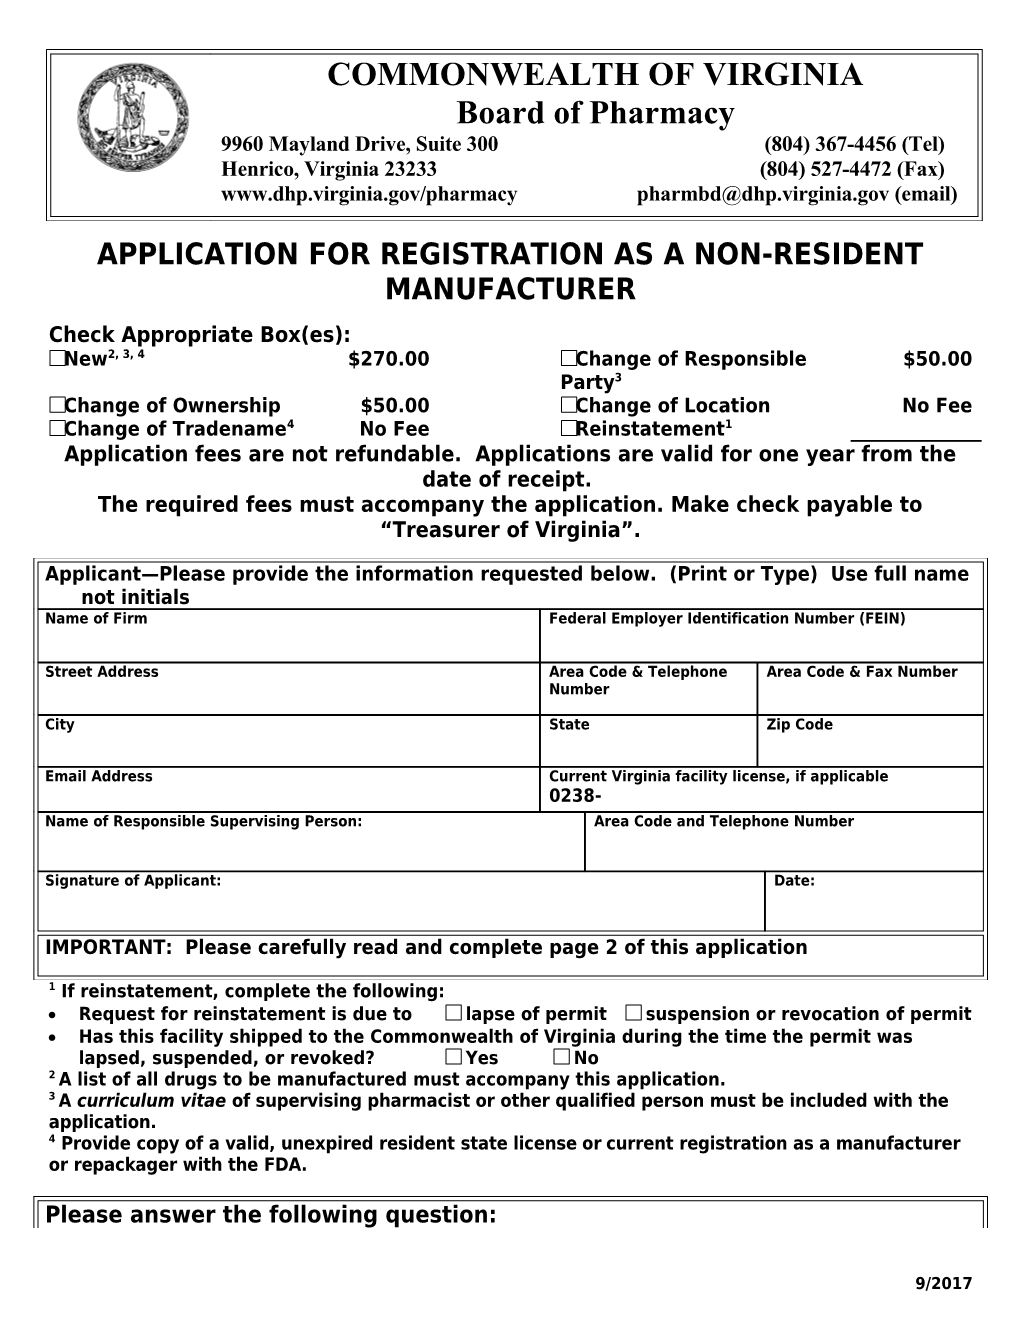 Board of Pharmacy Non-Resident Manufacturer Registration Application